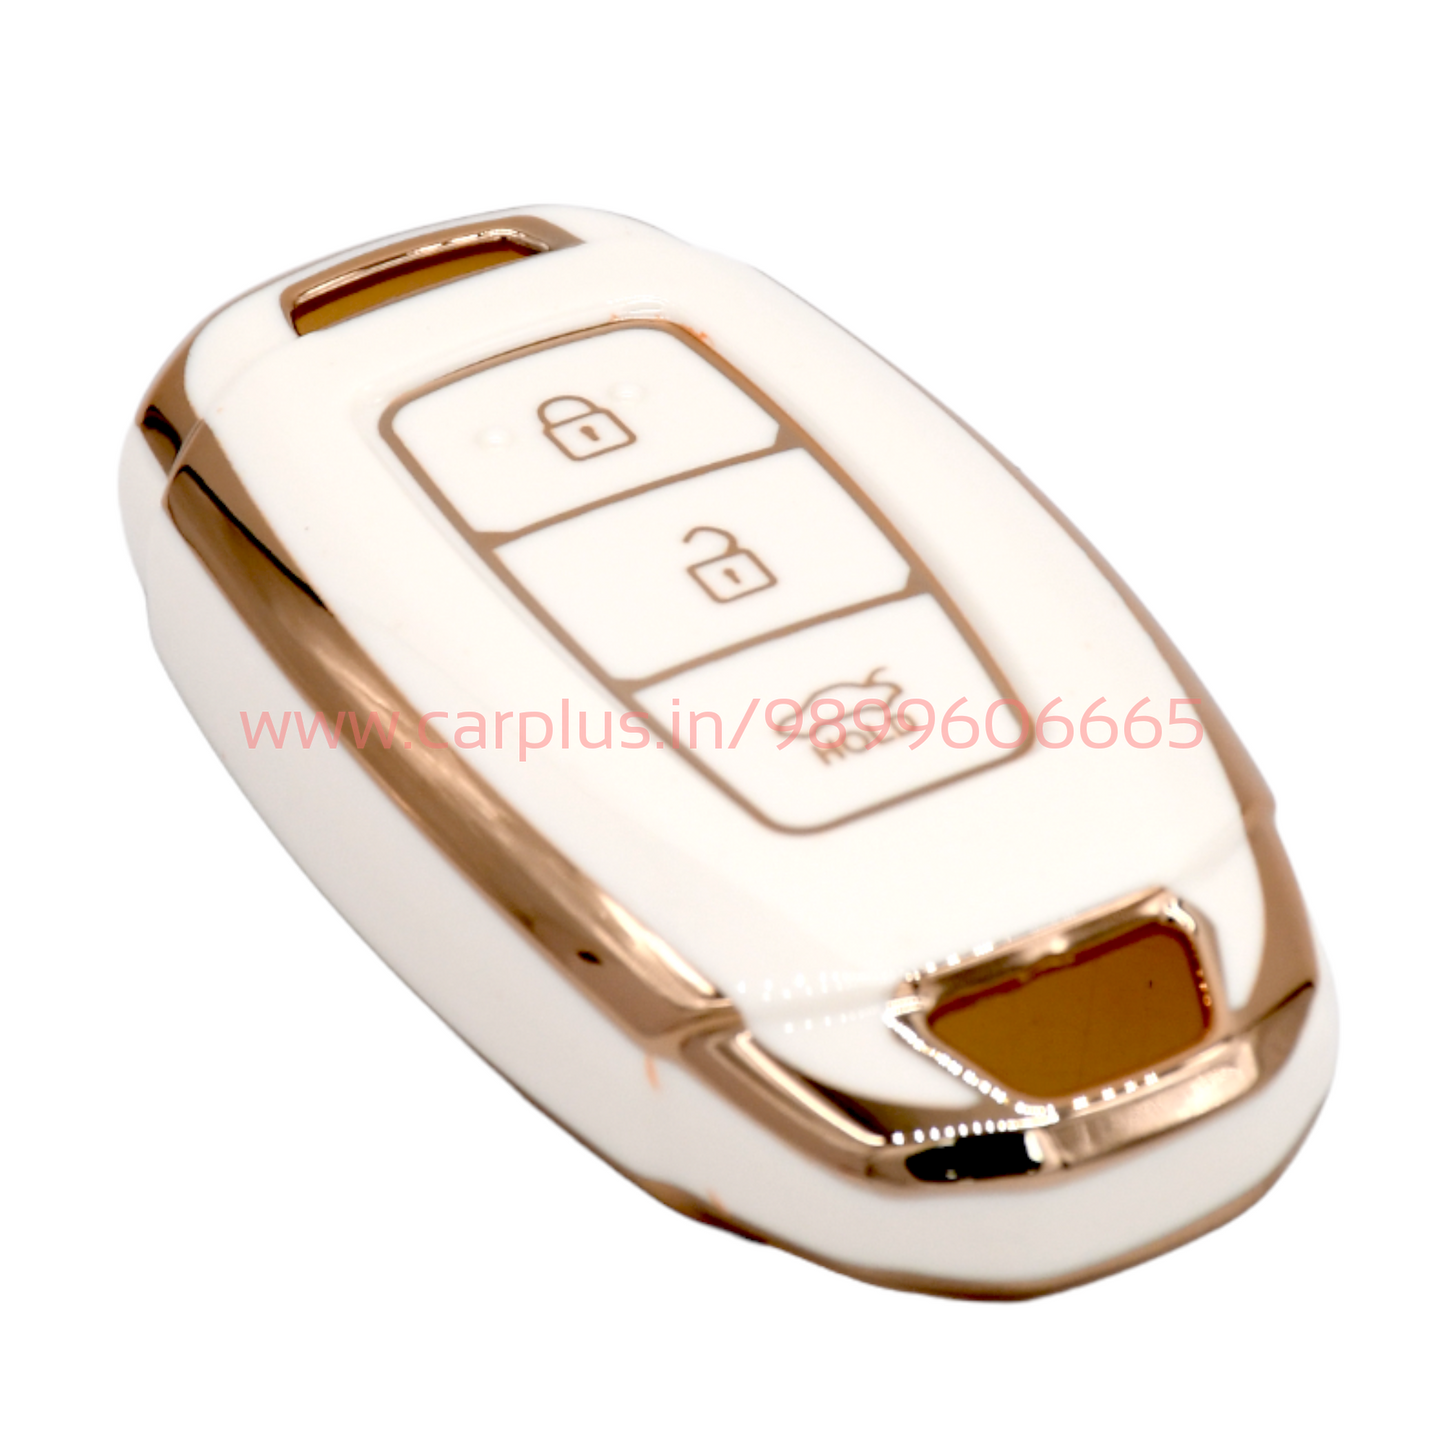 
                  
                    KMH - TPU Gold Car Key Cover Compatible with Hyundai Verna 3 Button Smart Key Cover-TPU GOLD KEY COVER-KMH-KEY COVER-White-CARPLUS
                  
                